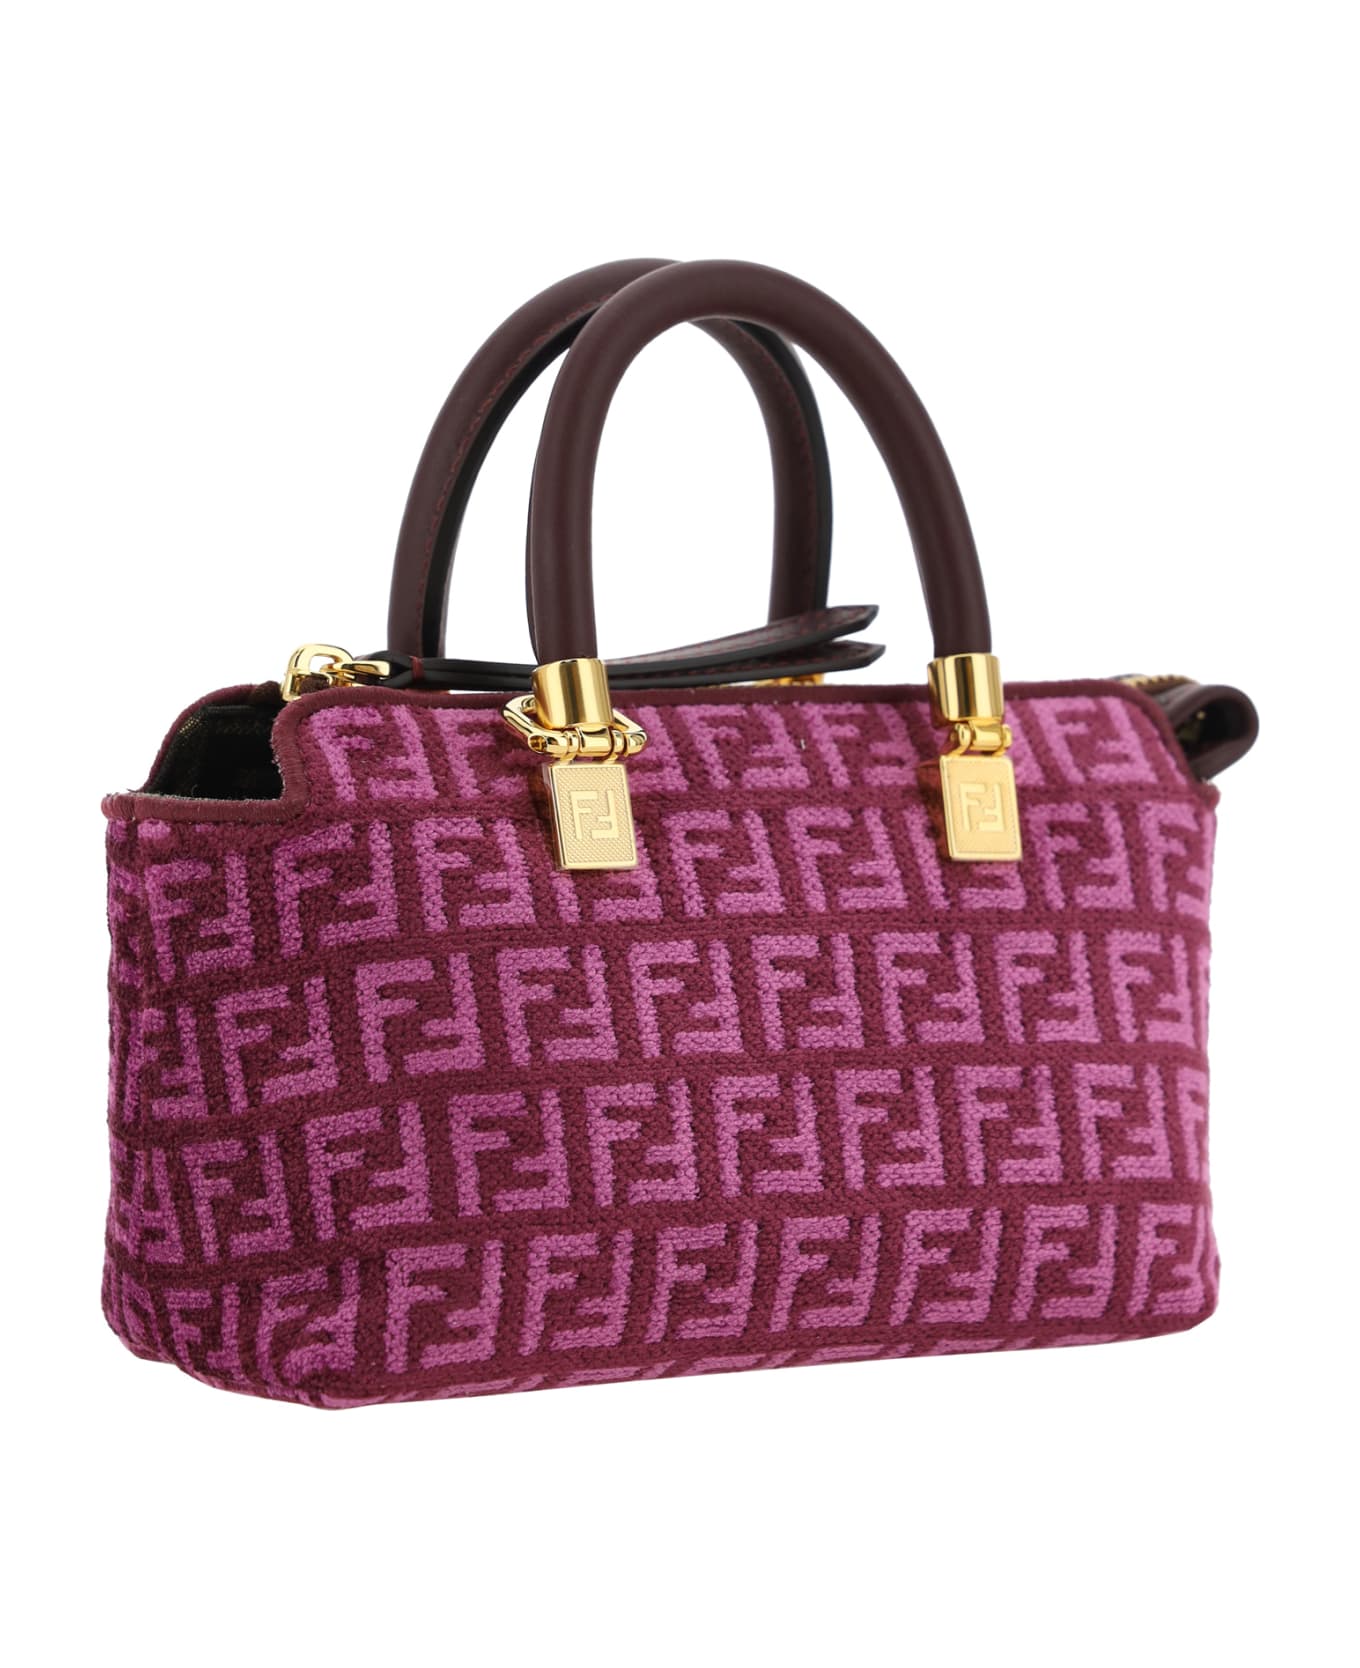 Fendi Mini By The Way Handbag - Pink, brown